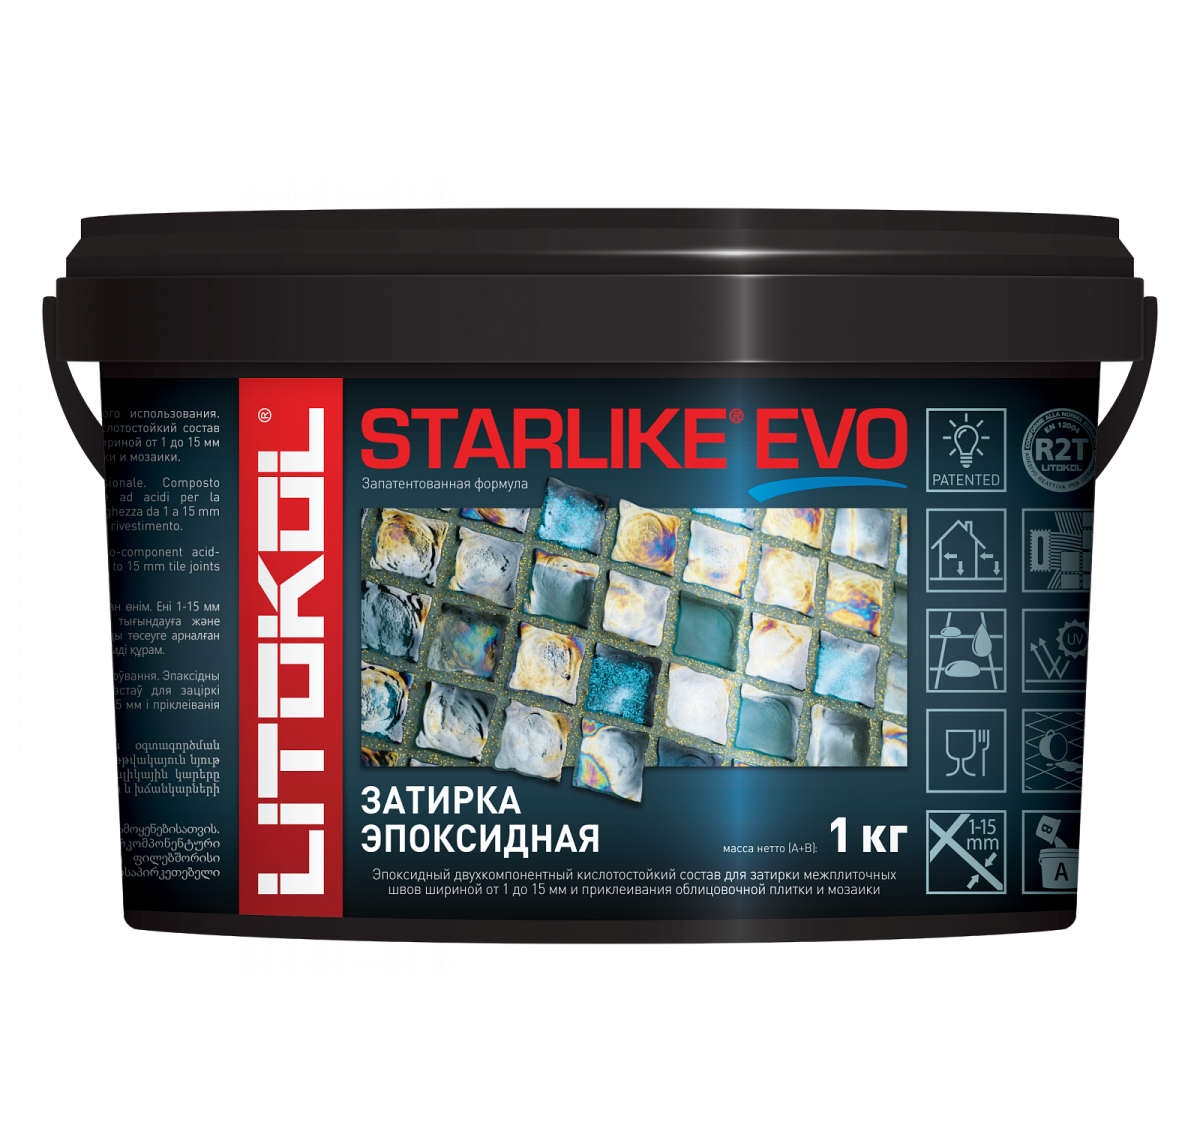 Затирка эпоксидная Starlike Evo S.215 1 кг Litokol 14049